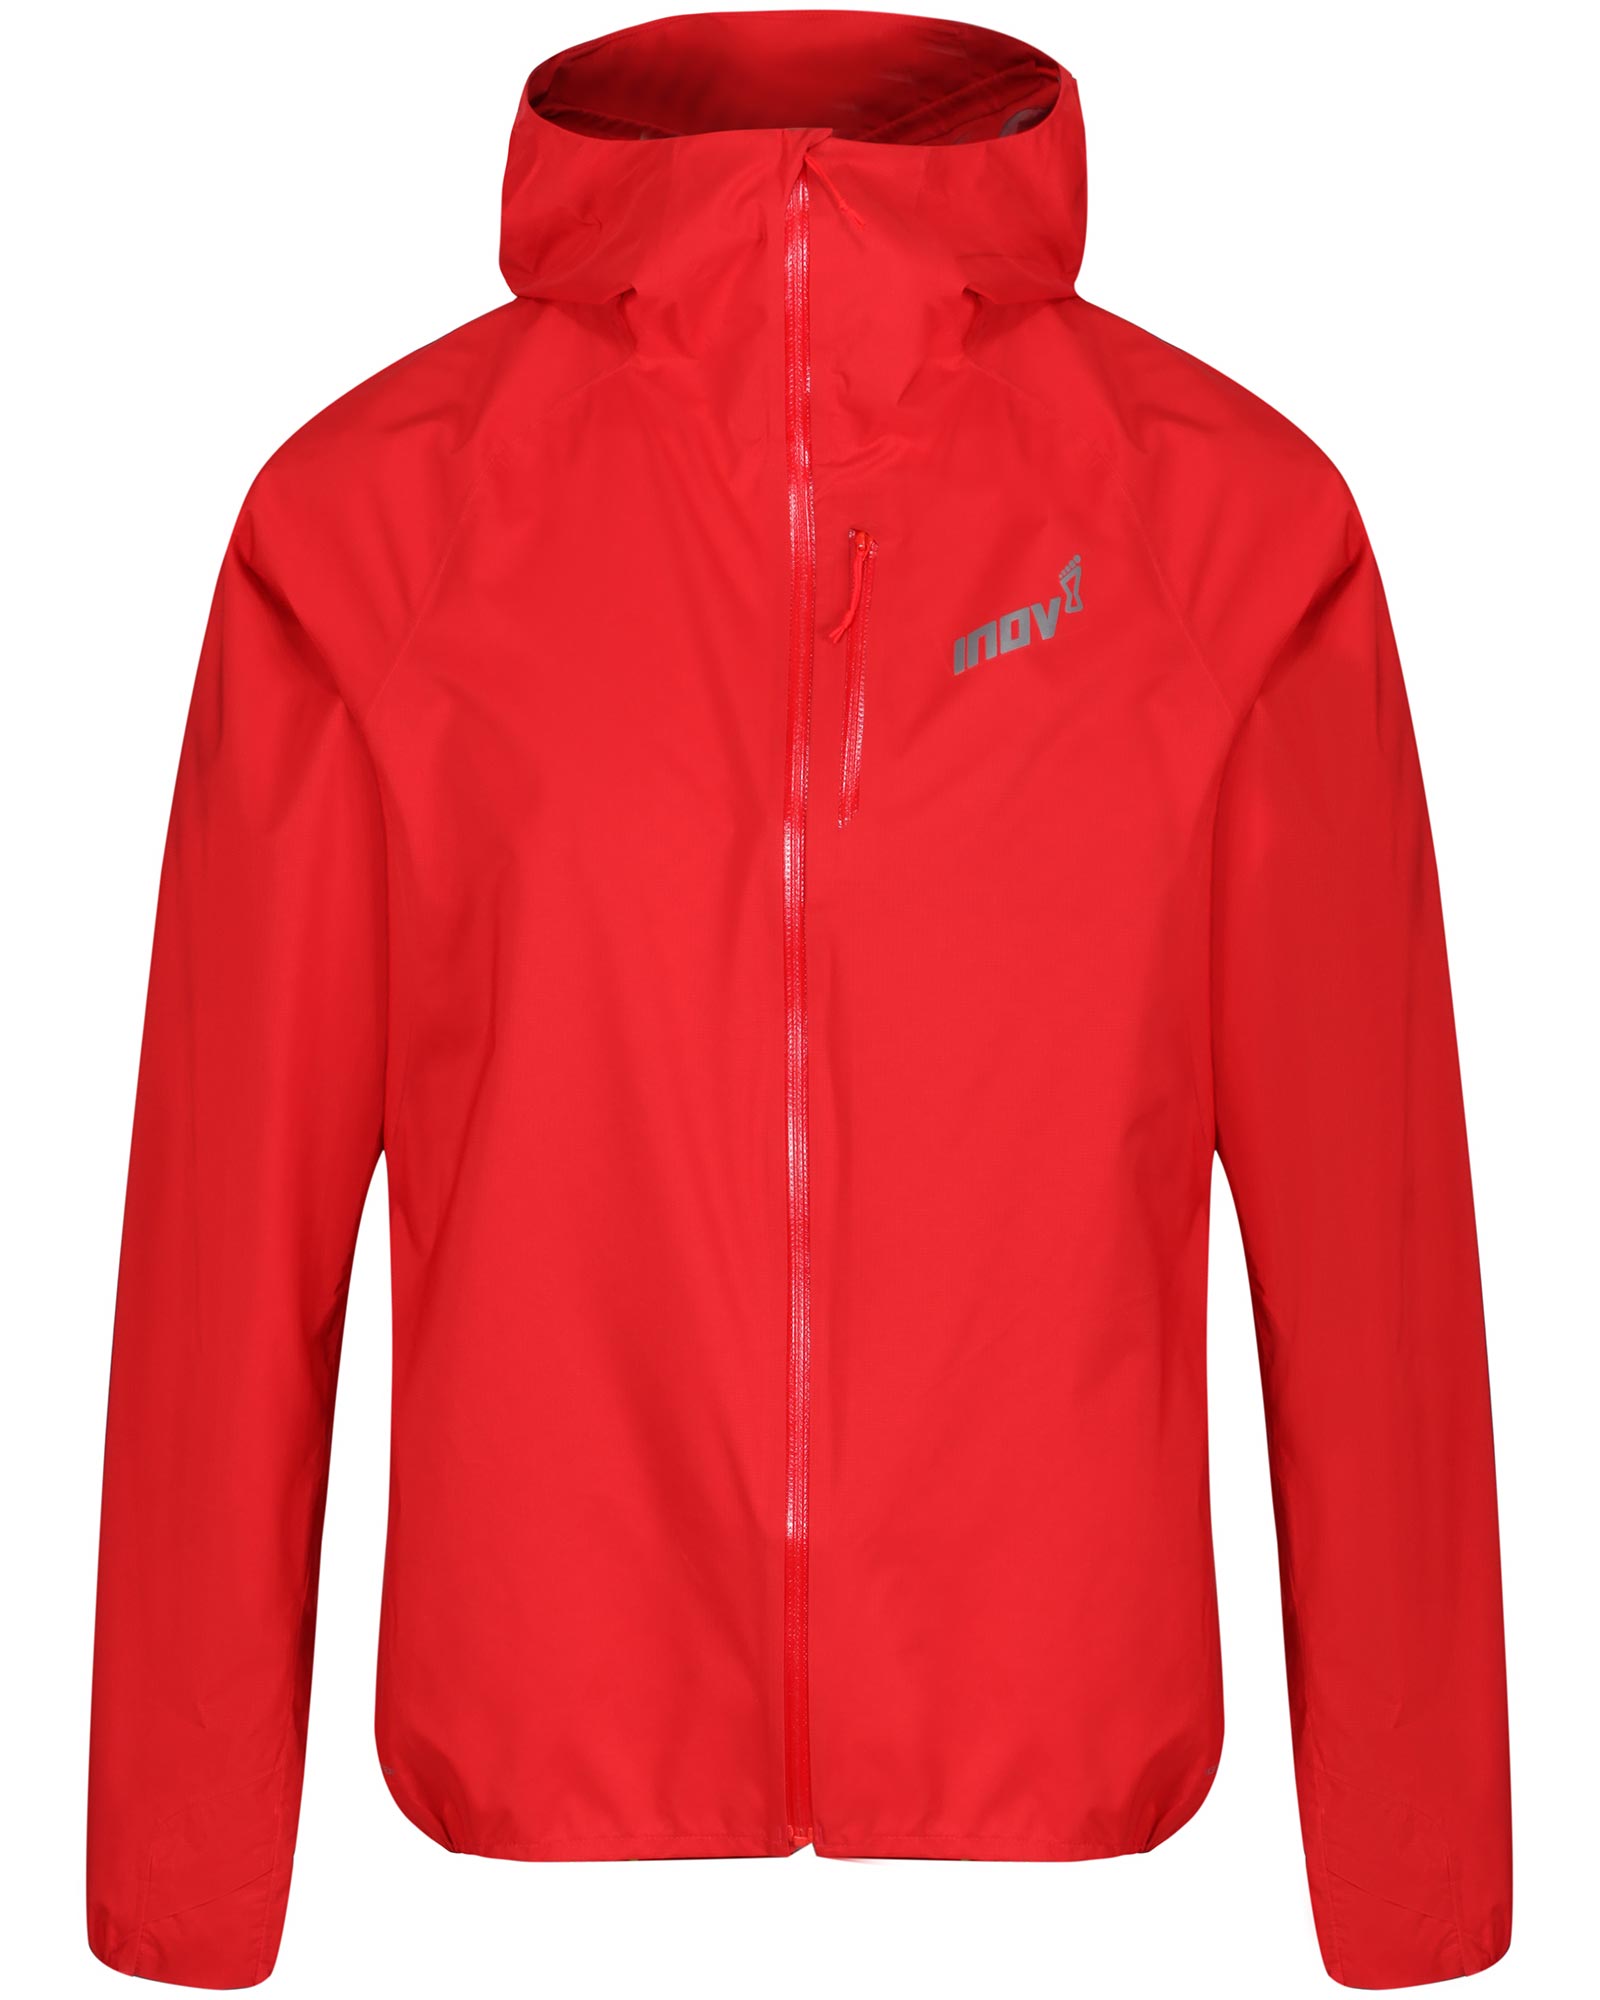 Inov 8 Full Zip Stormshell Men’s Jacket - Red XL